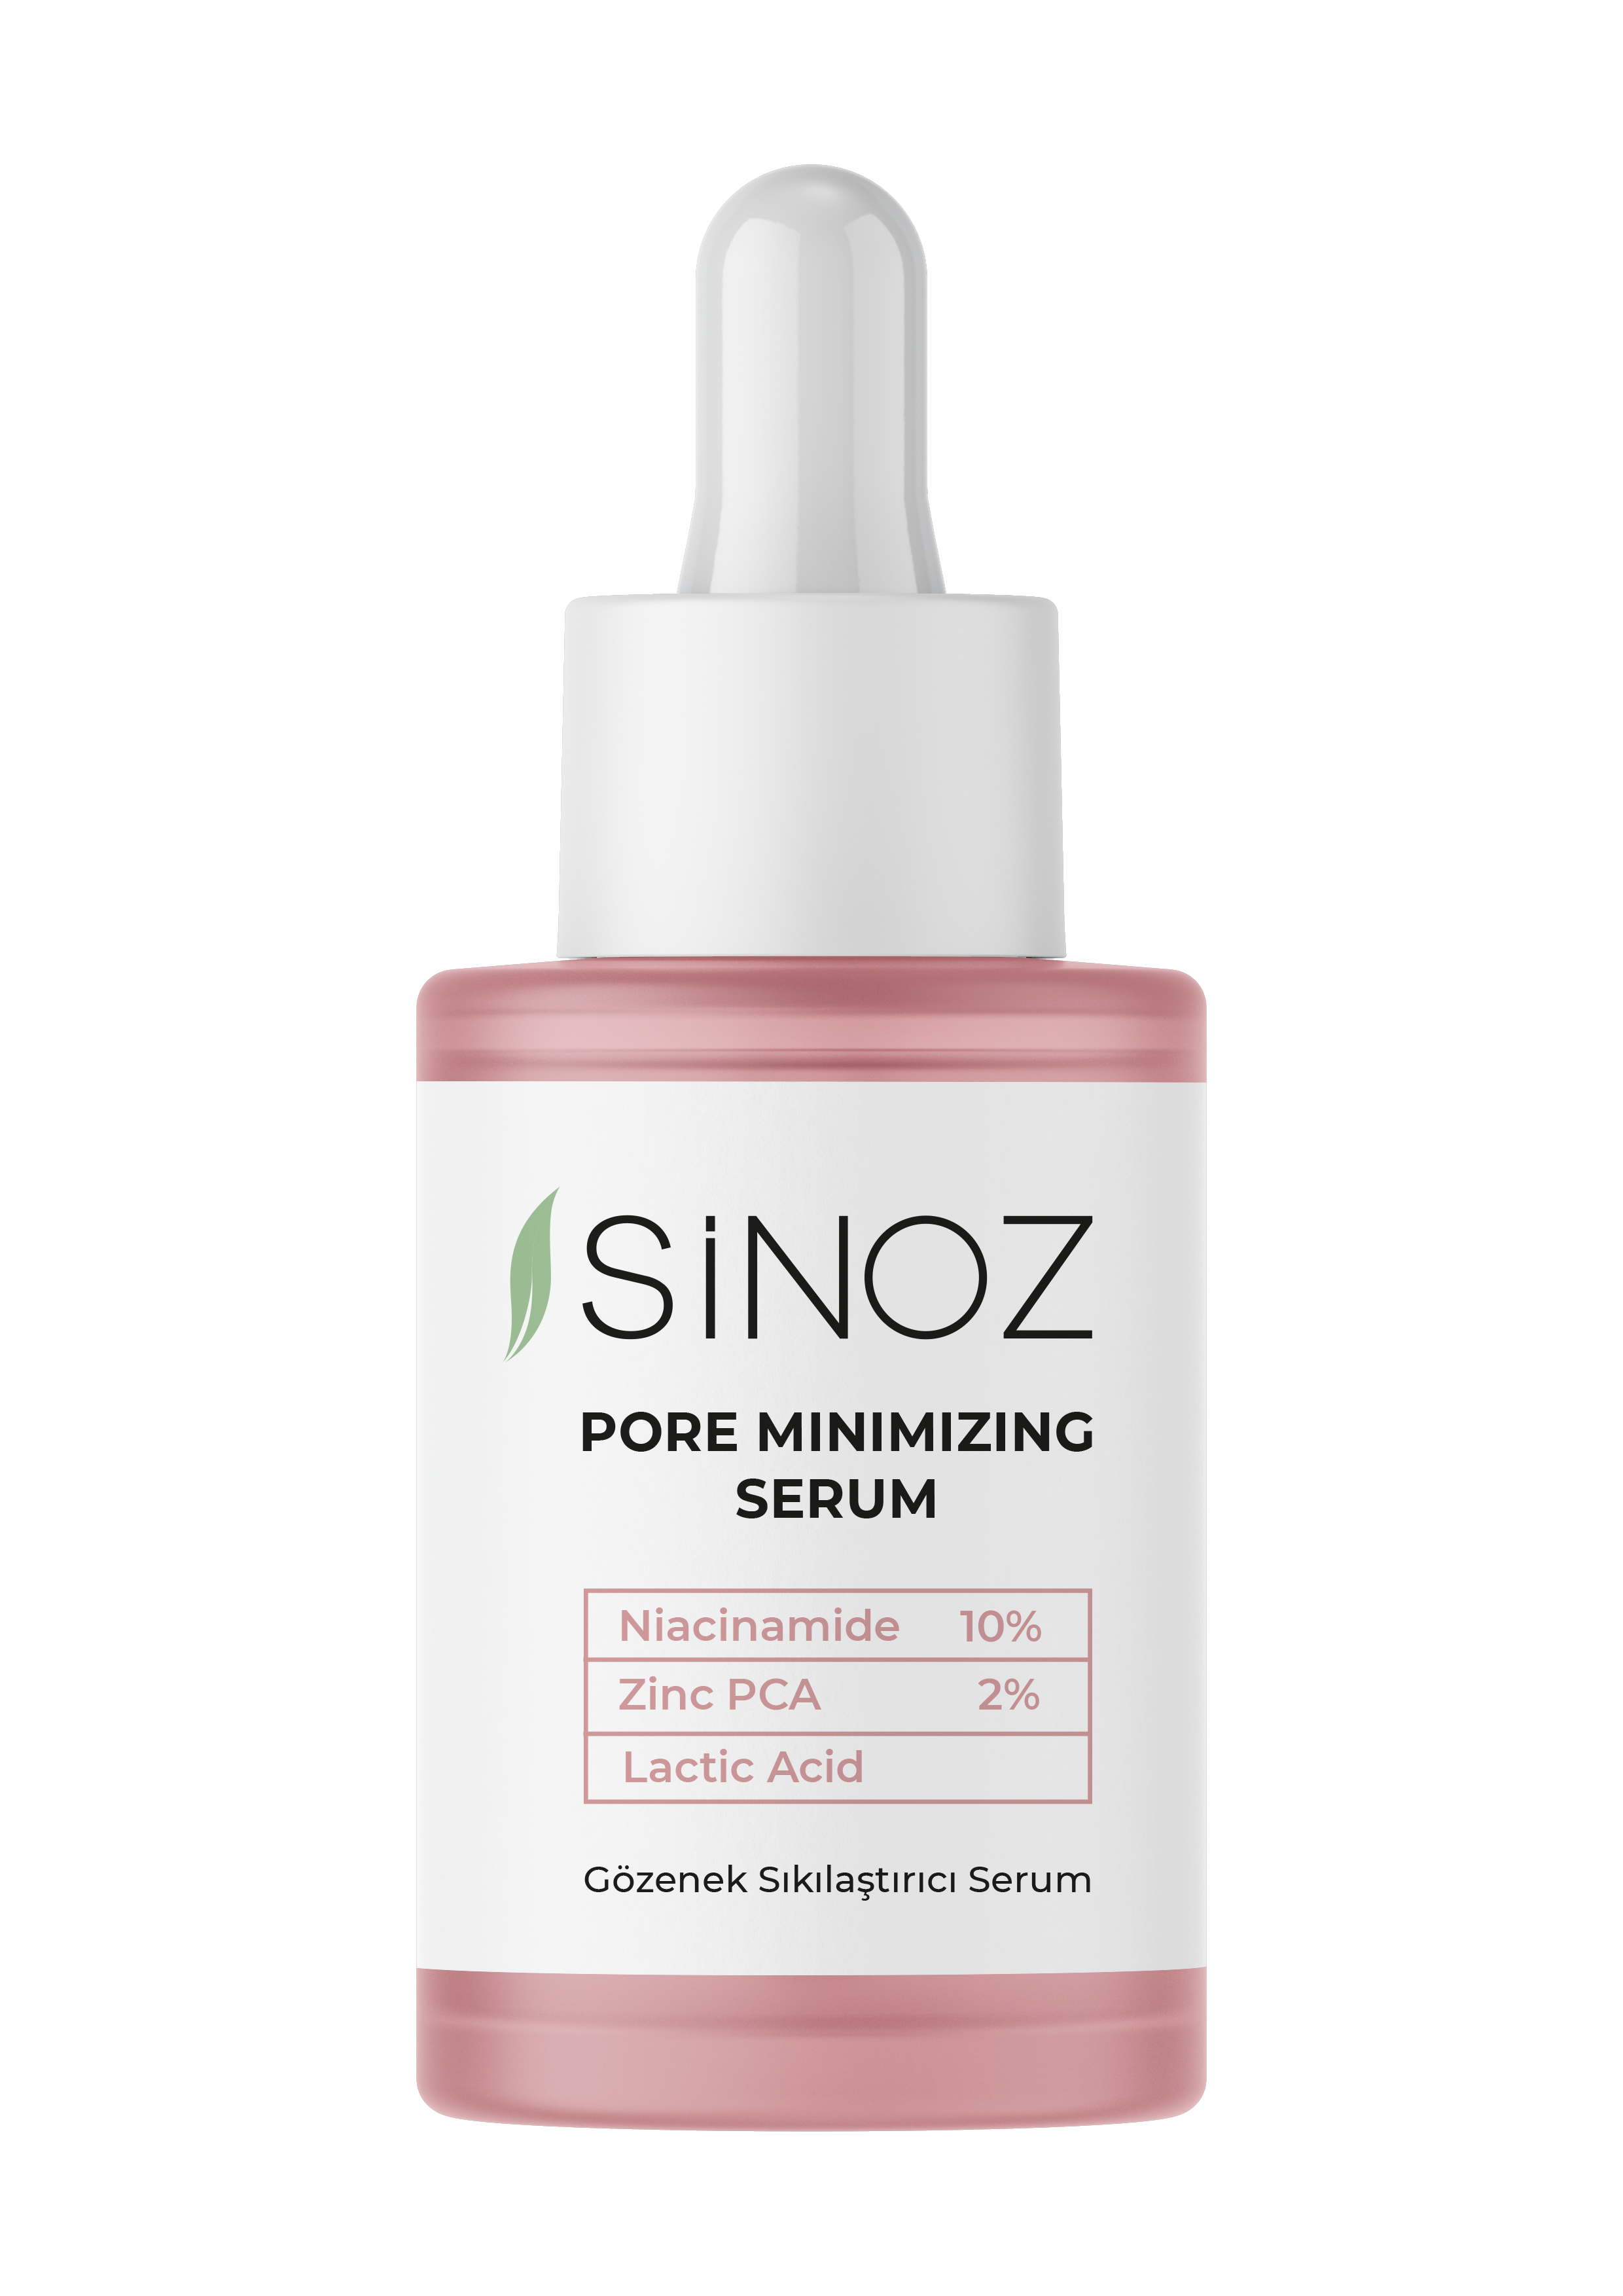 Sinoz Niacinamide Serum - Pore Minimizing